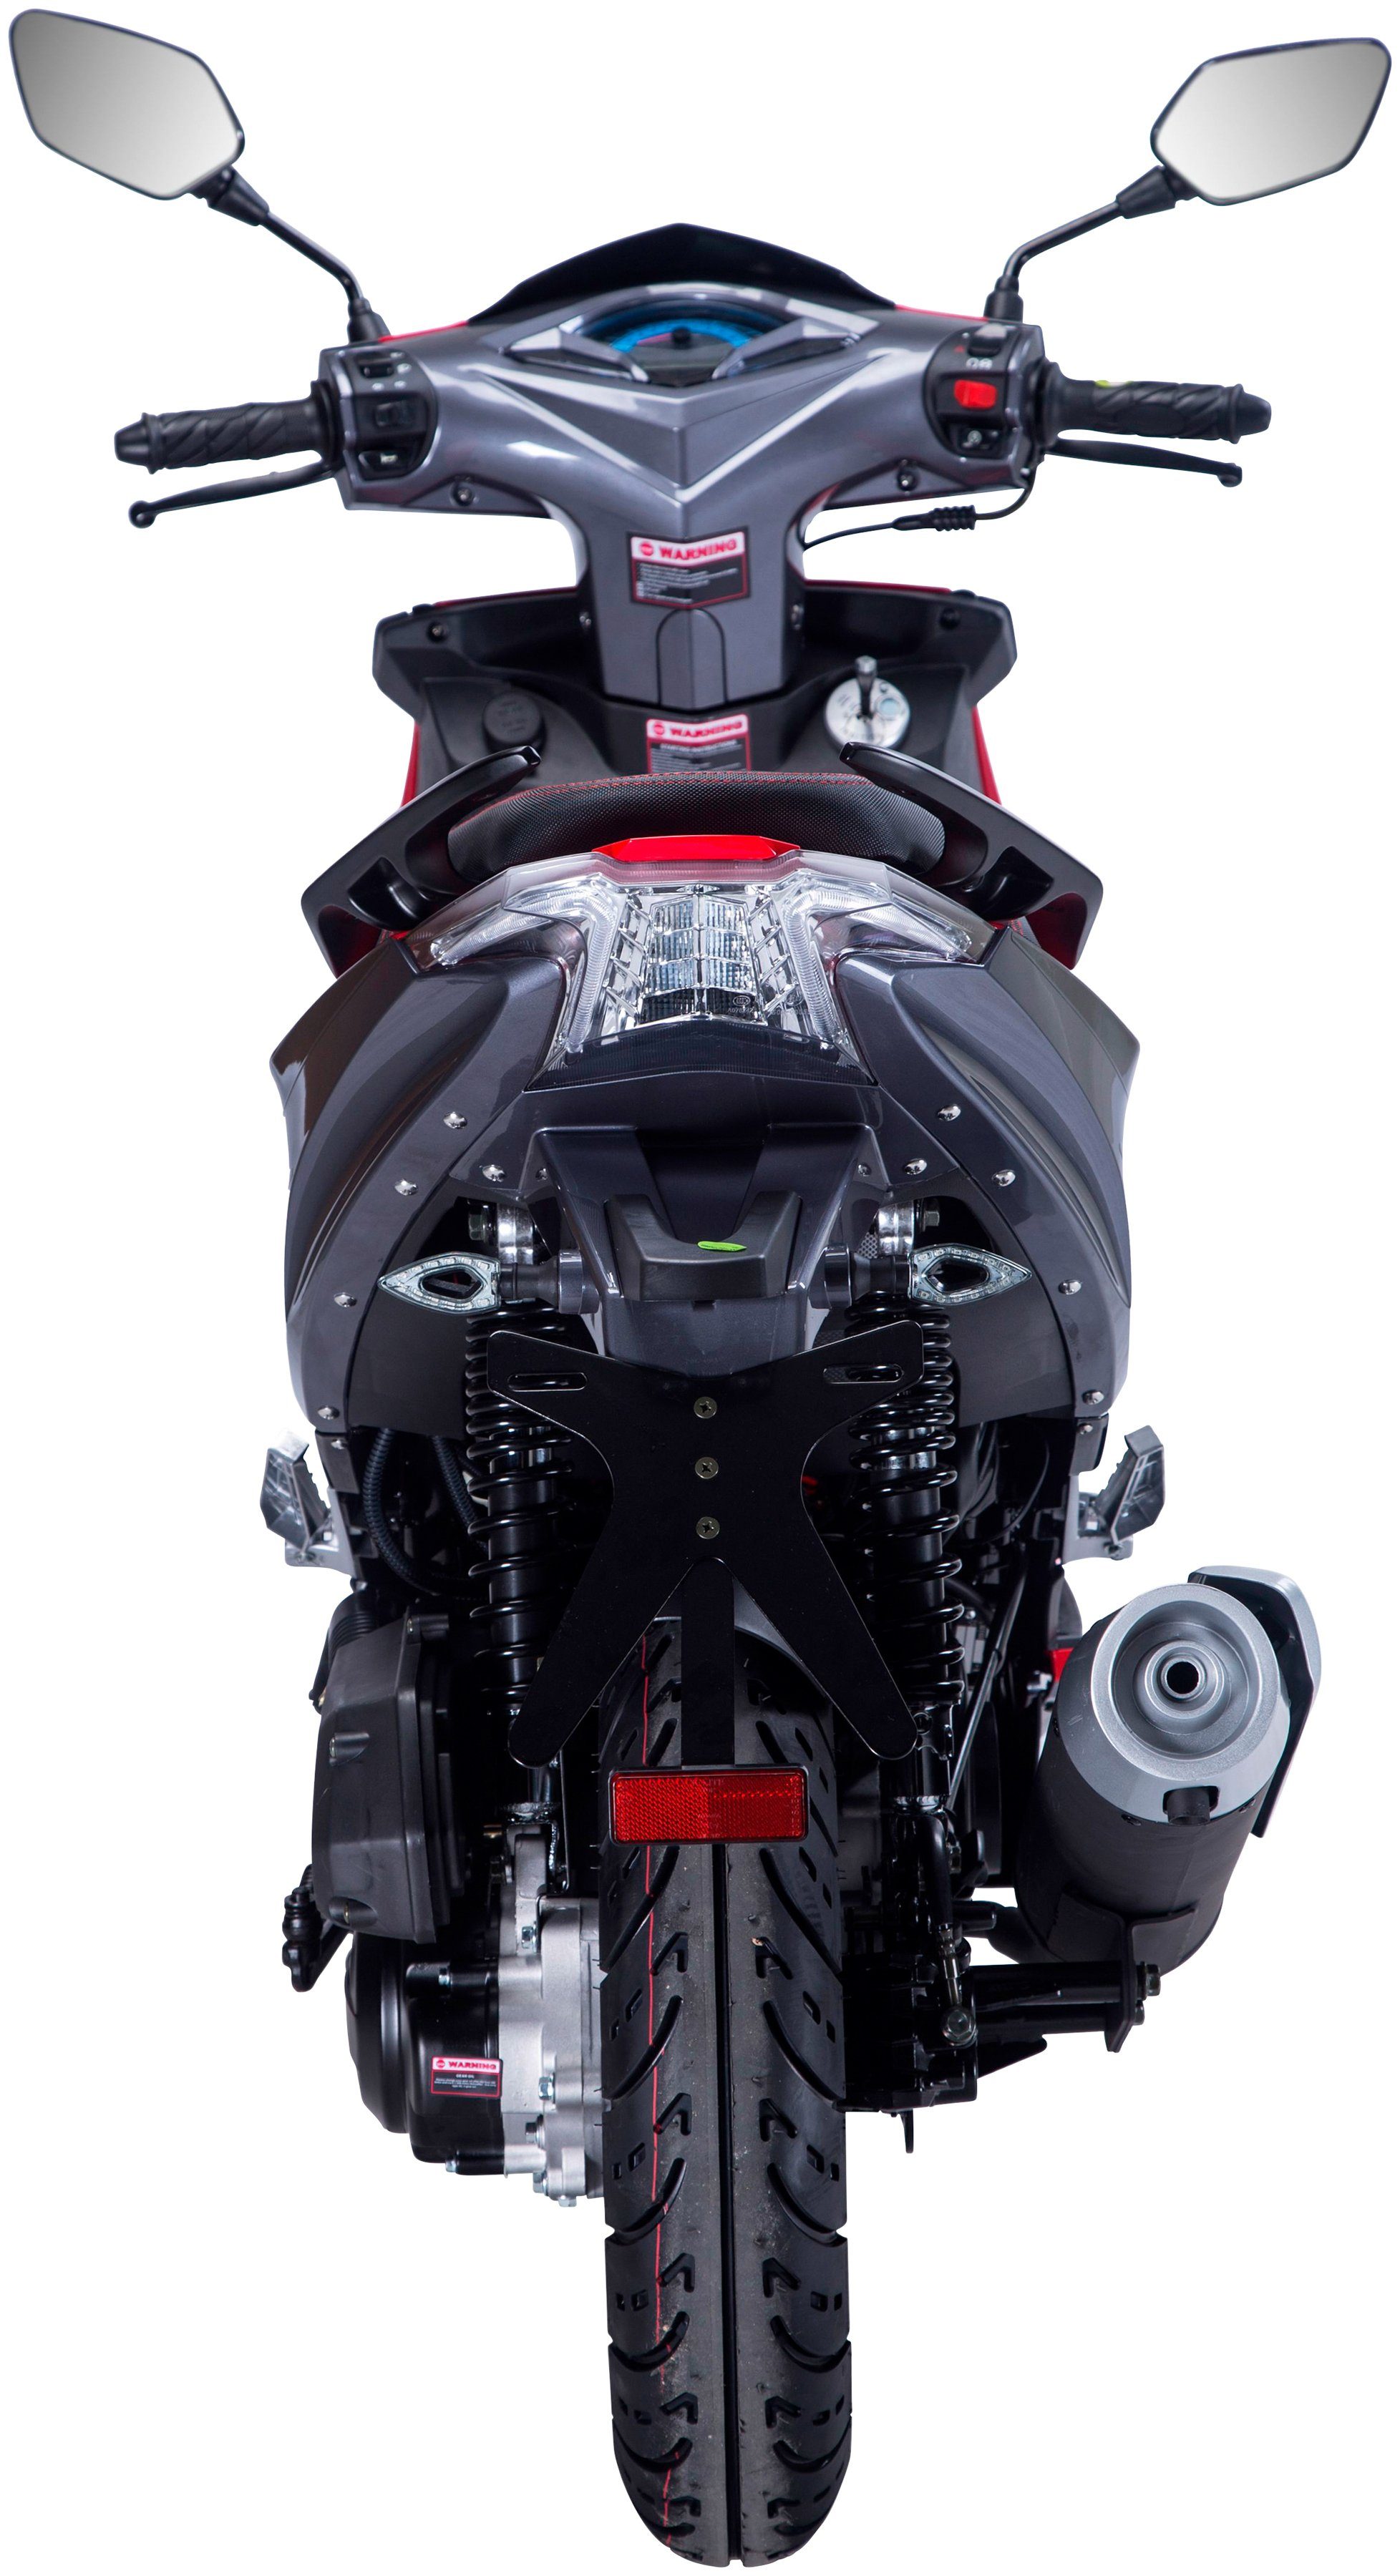 Euro Motorroller Striker, UNION schwarz/rot GT 45 5 ccm, 50 km/h,